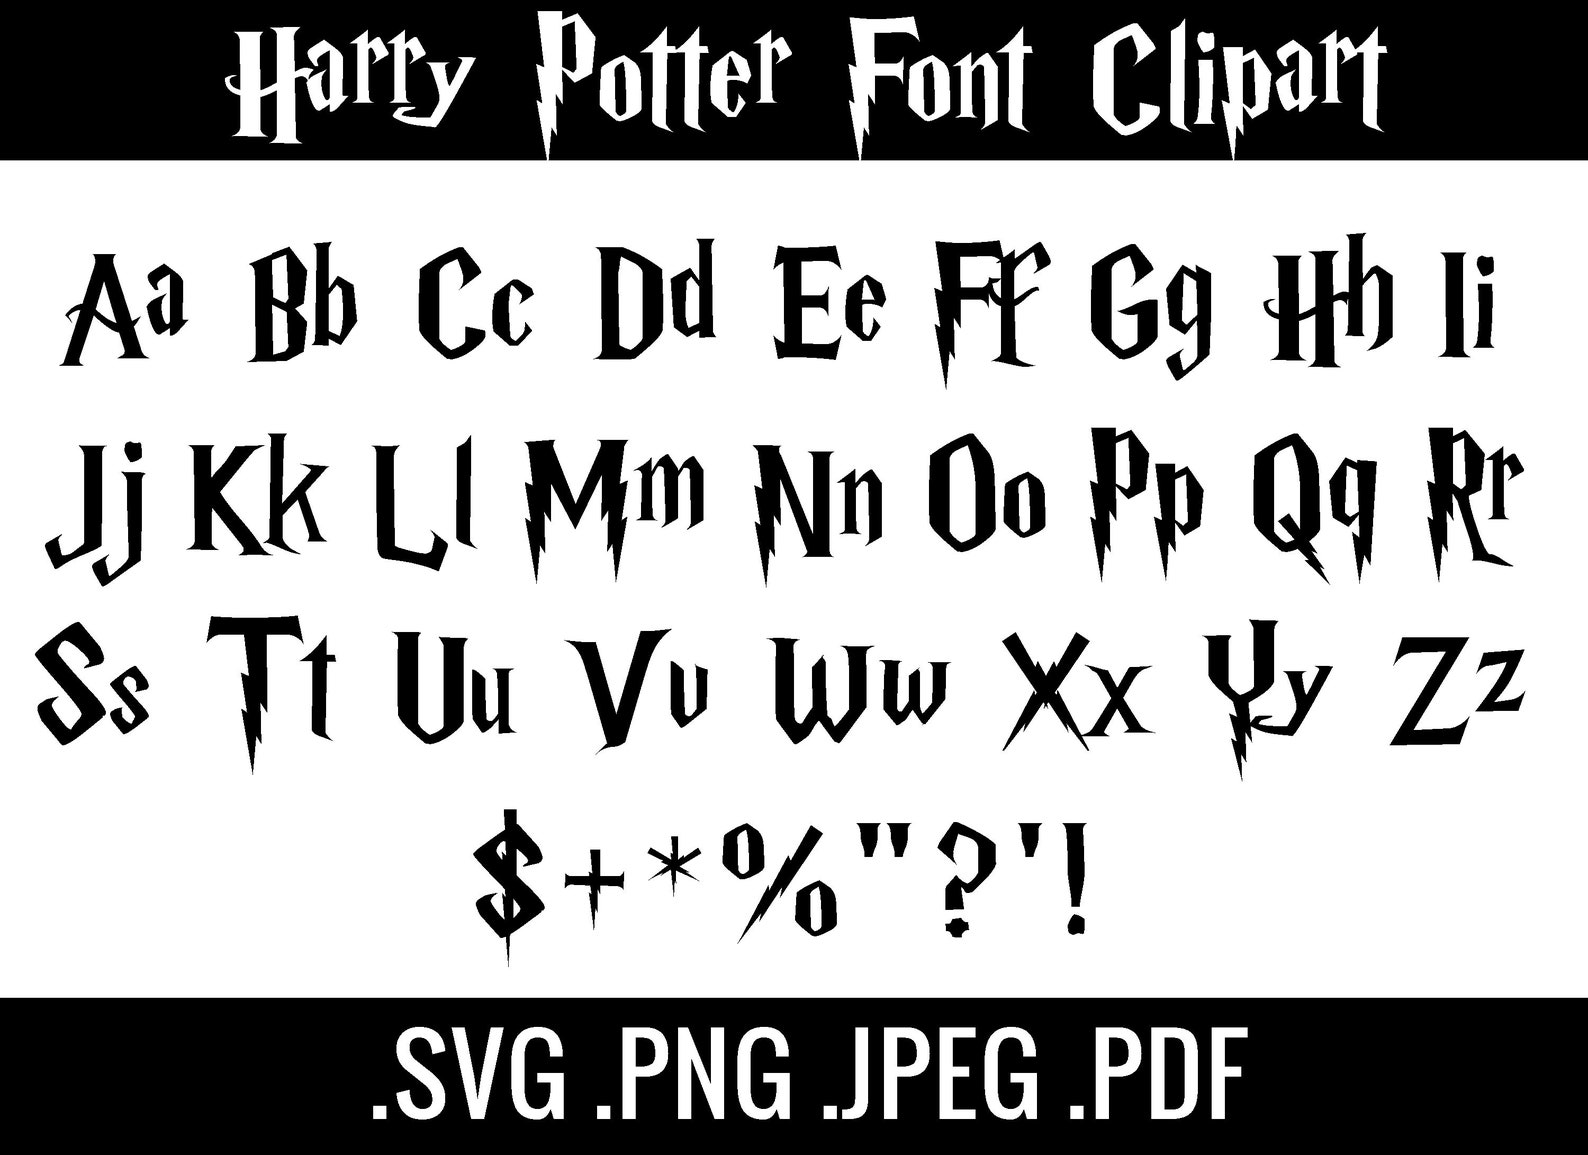 free harry potter font download